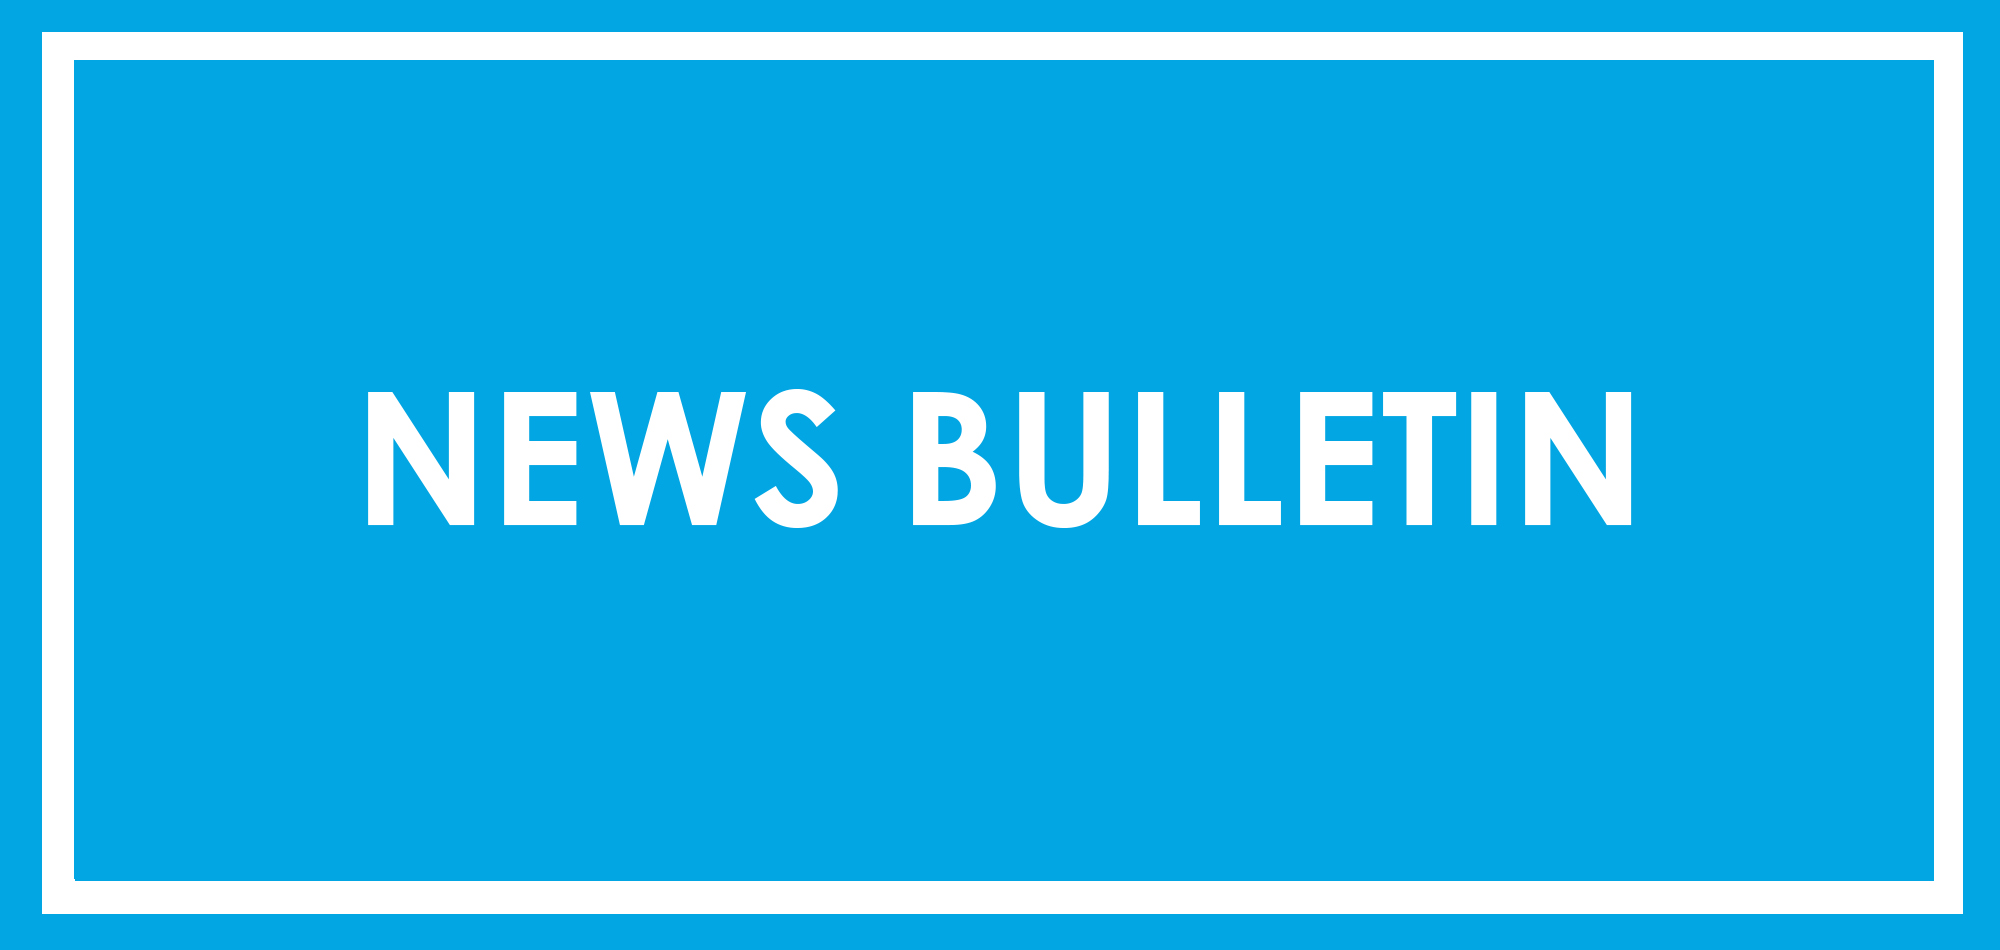 News Bulletin - 28.04.21